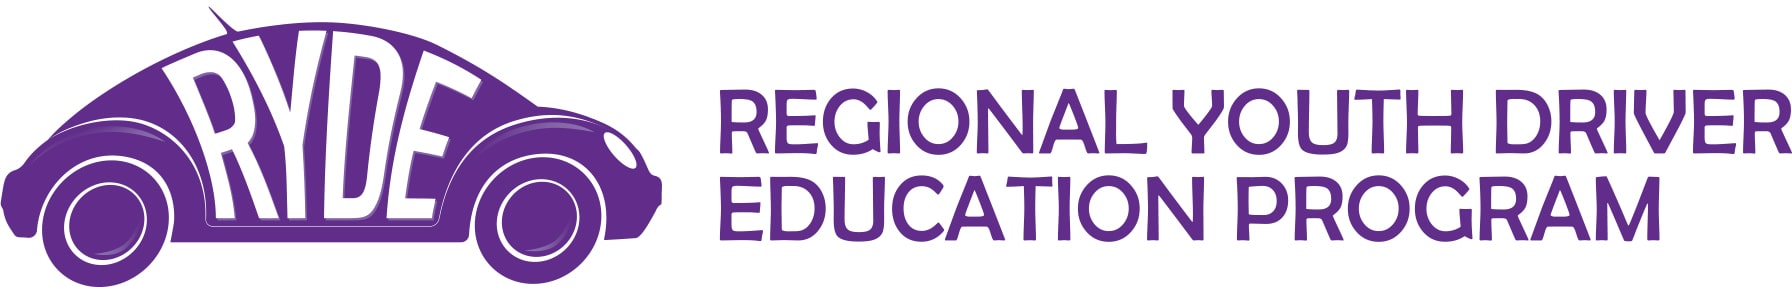 ryde-regional-youth-driver-education-program